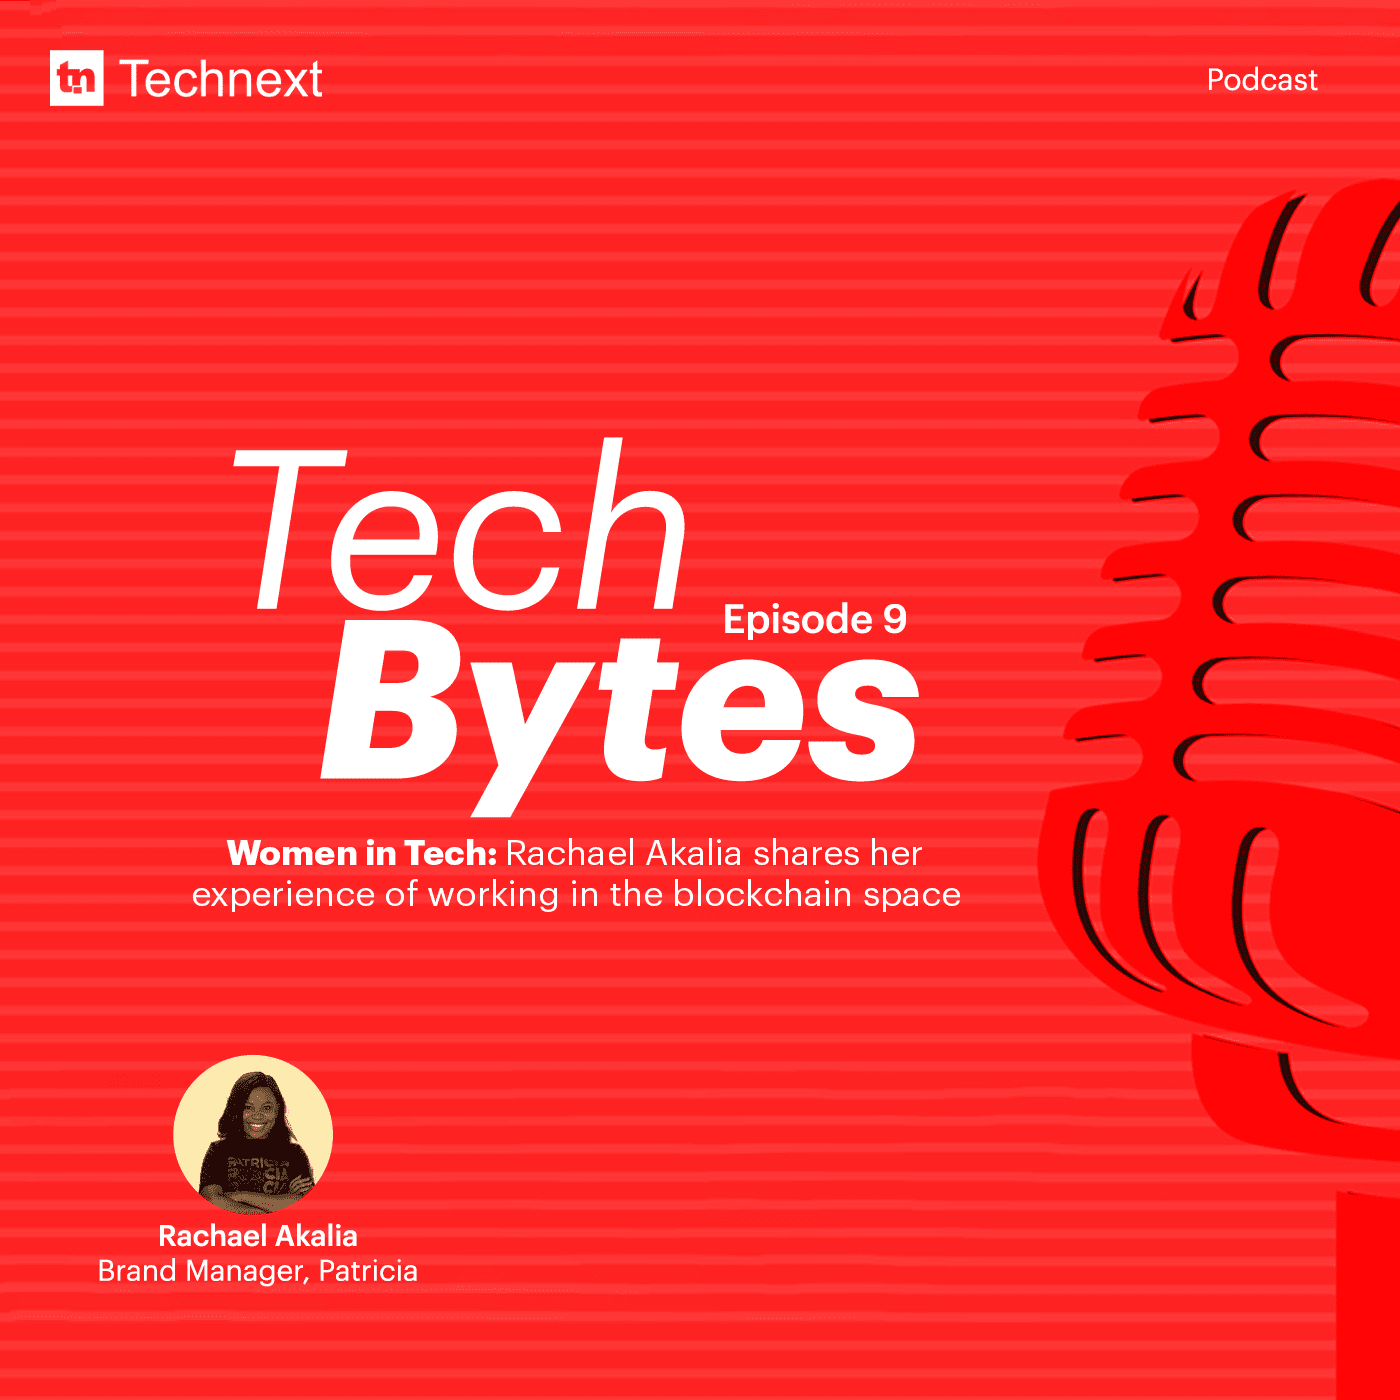 Rachael Akalia shares her take on the episode 9 of Tech Bytes